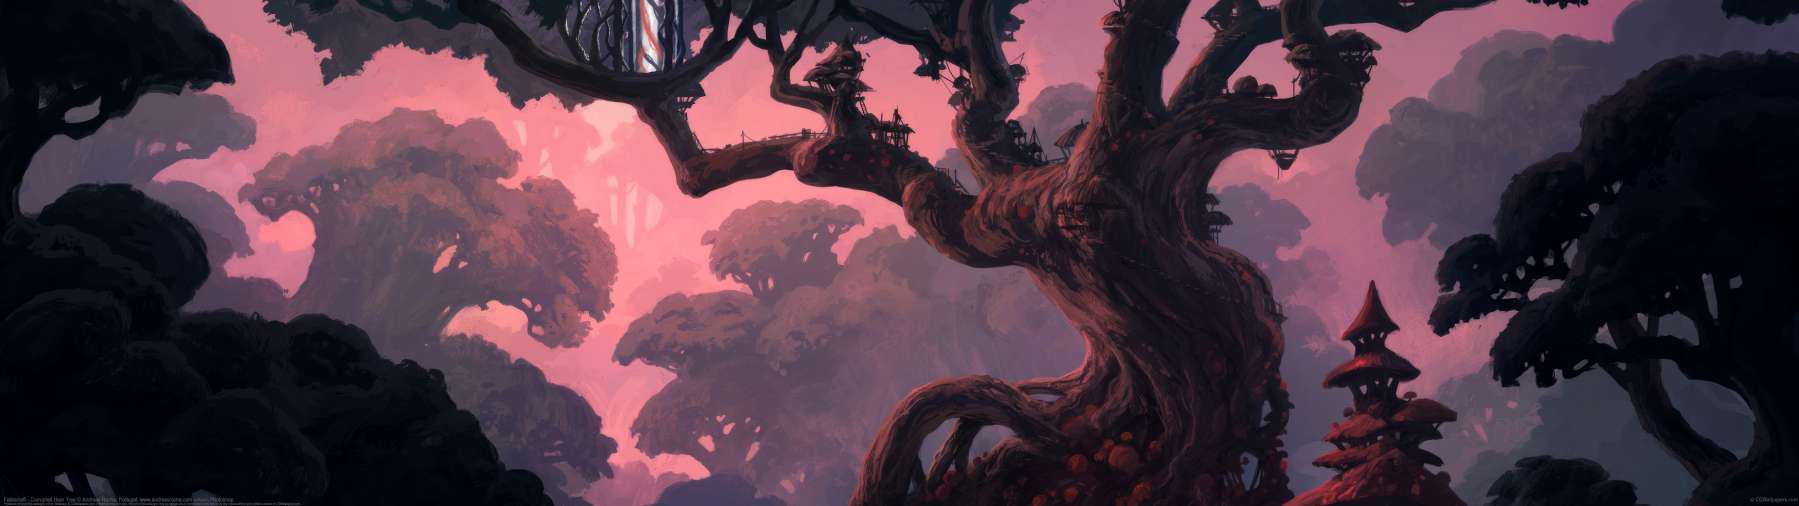 Fablecraft - Corrupted Hear Tree  ultrawide wallpaper